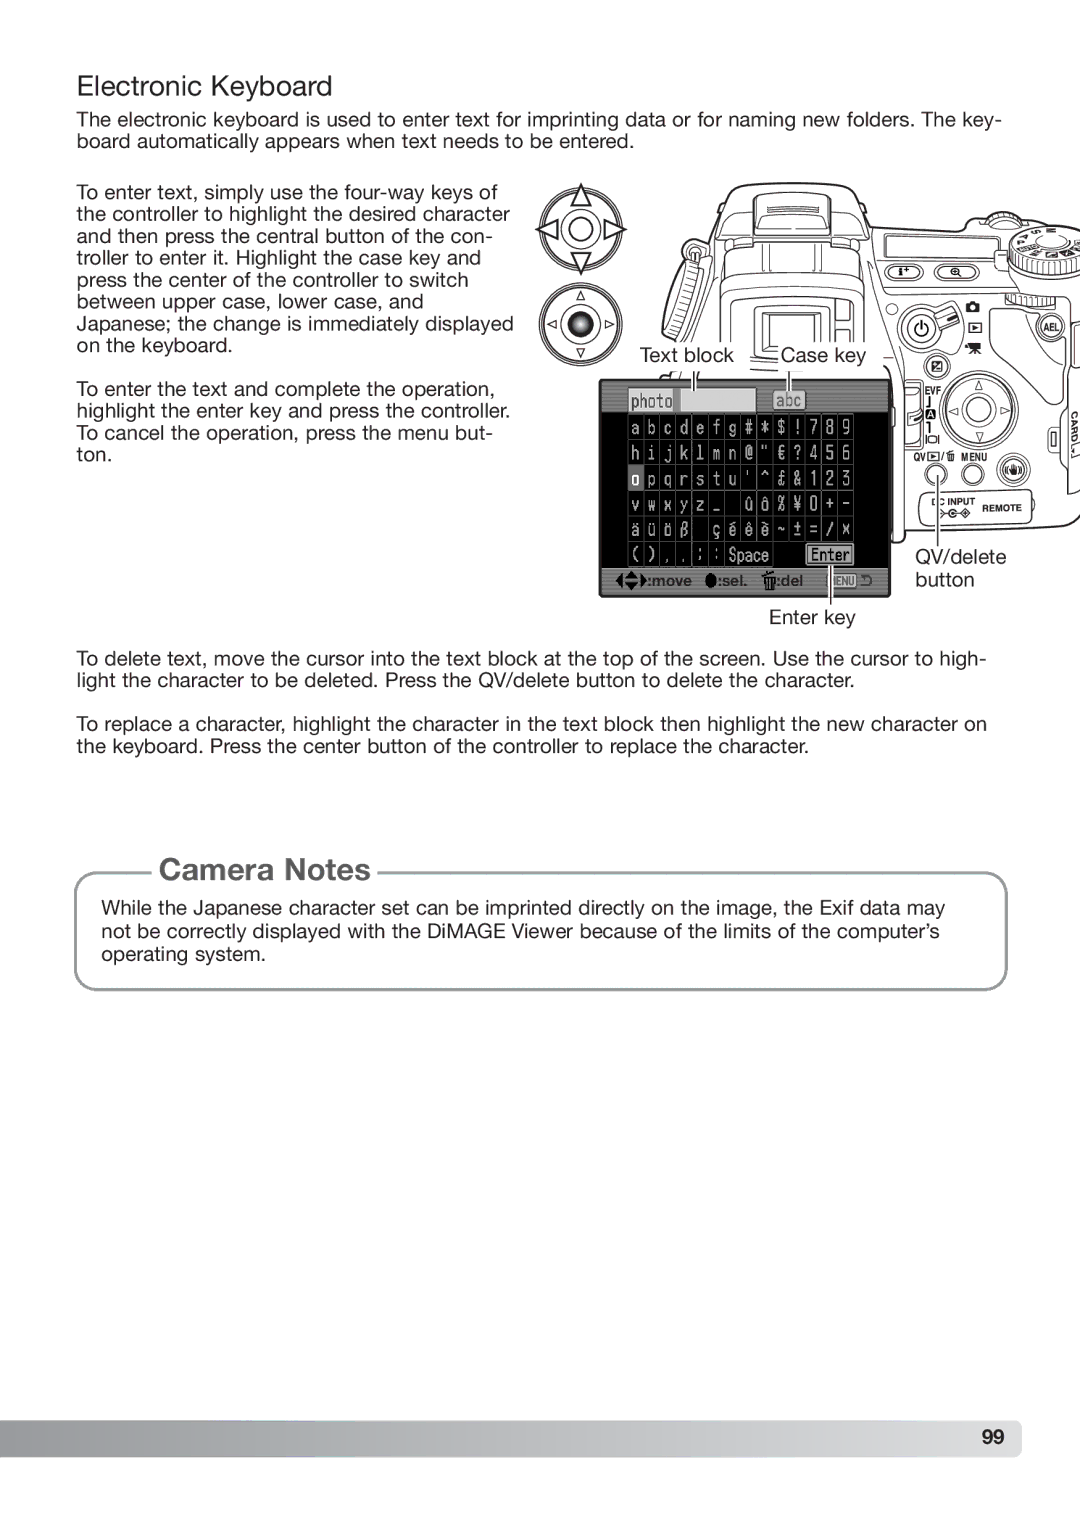 Konica Minolta DiMAGE_A2 instruction manual Electronic Keyboard 